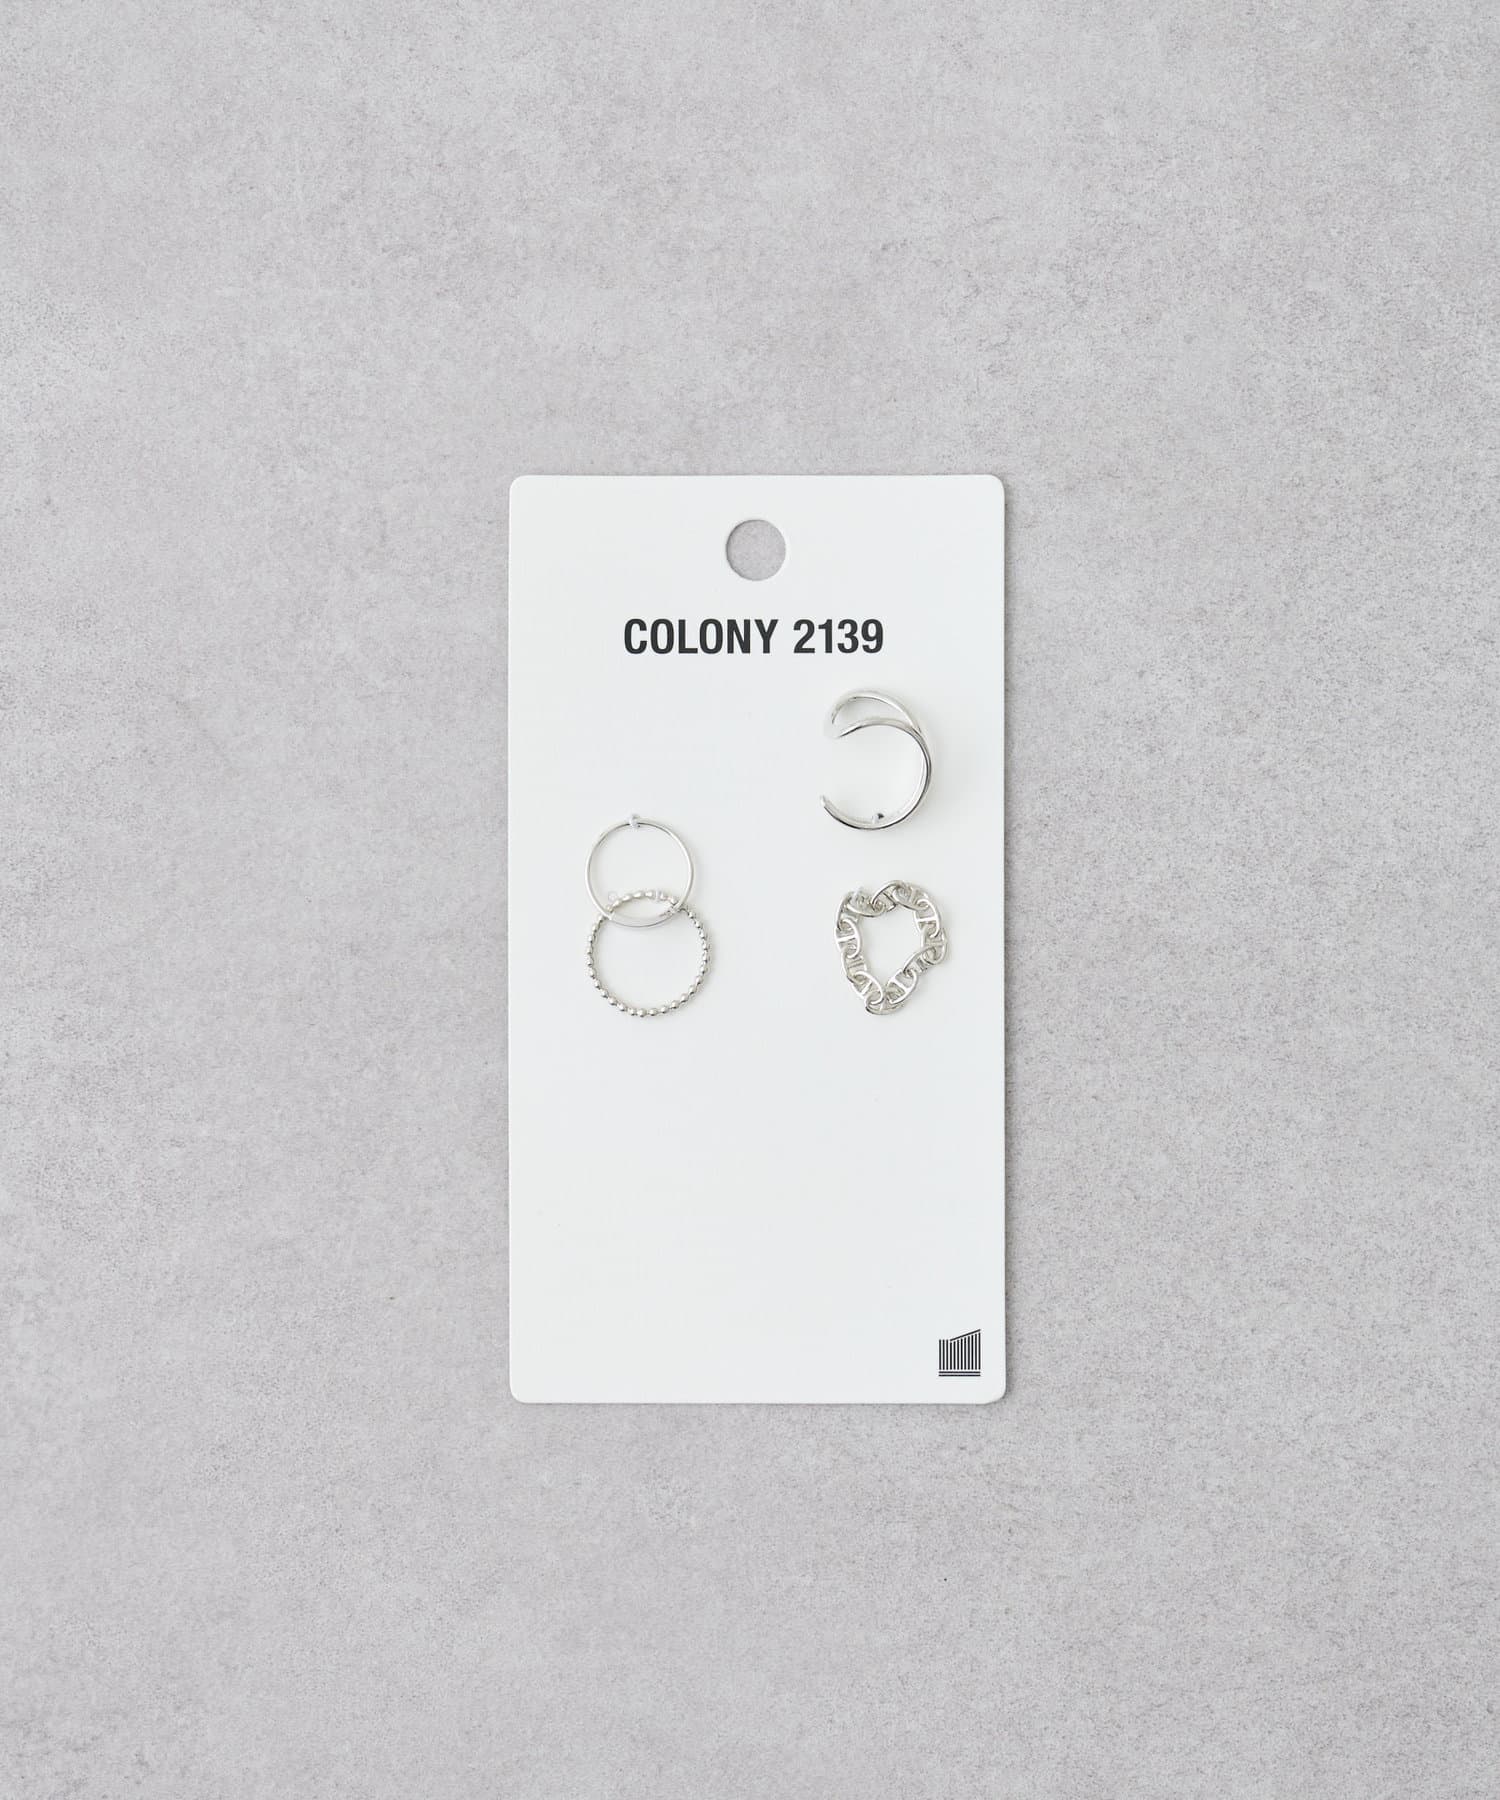 COLONY 2139(コロニー トゥーワンスリーナイン) SETリングA